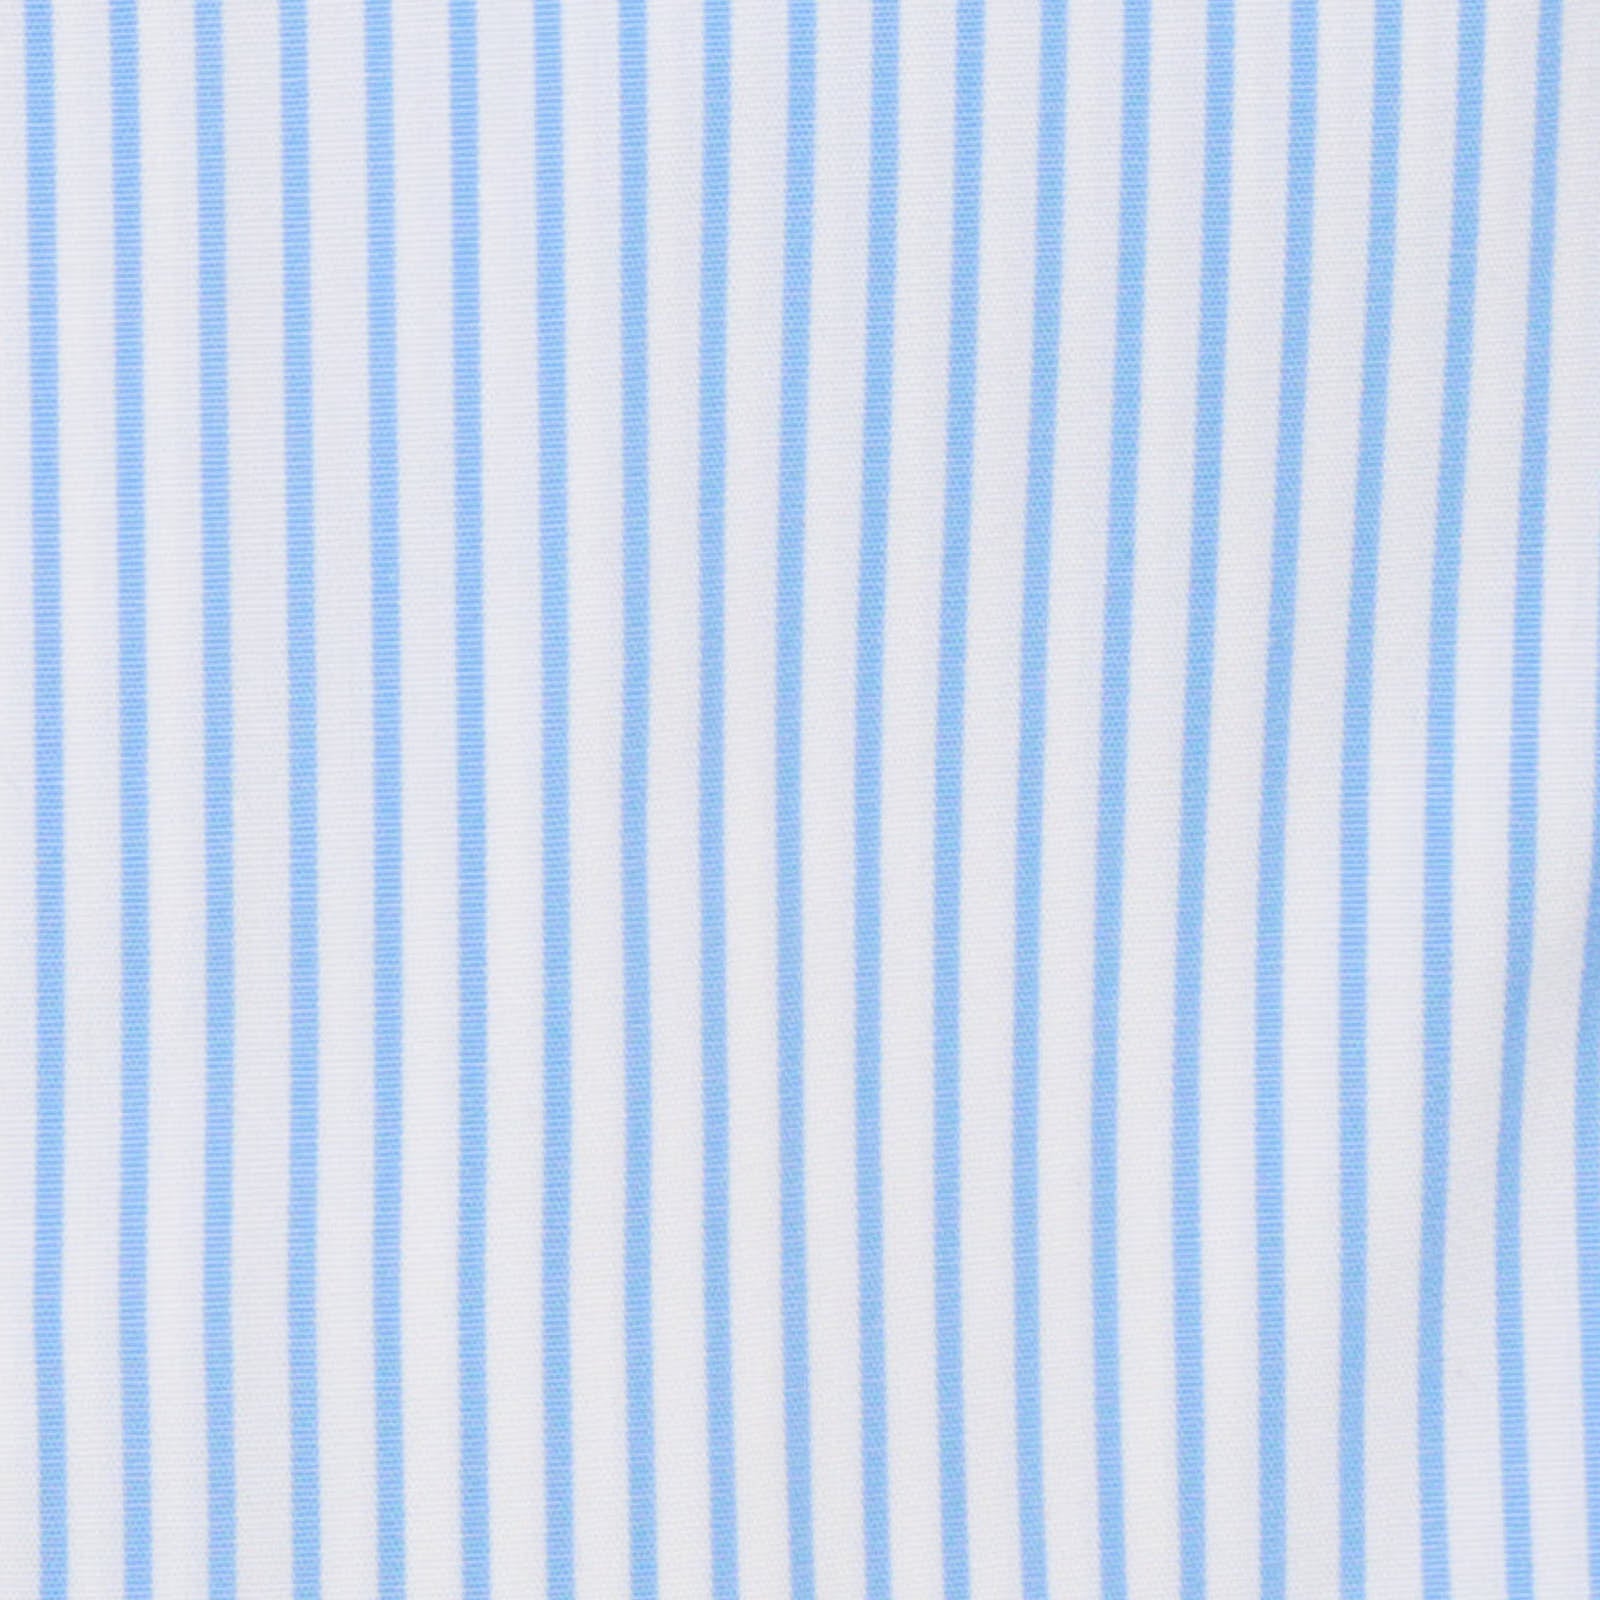 VANNUCCI Milano Blue-White Striped Cotton French Cuff Dress Shirt NEW